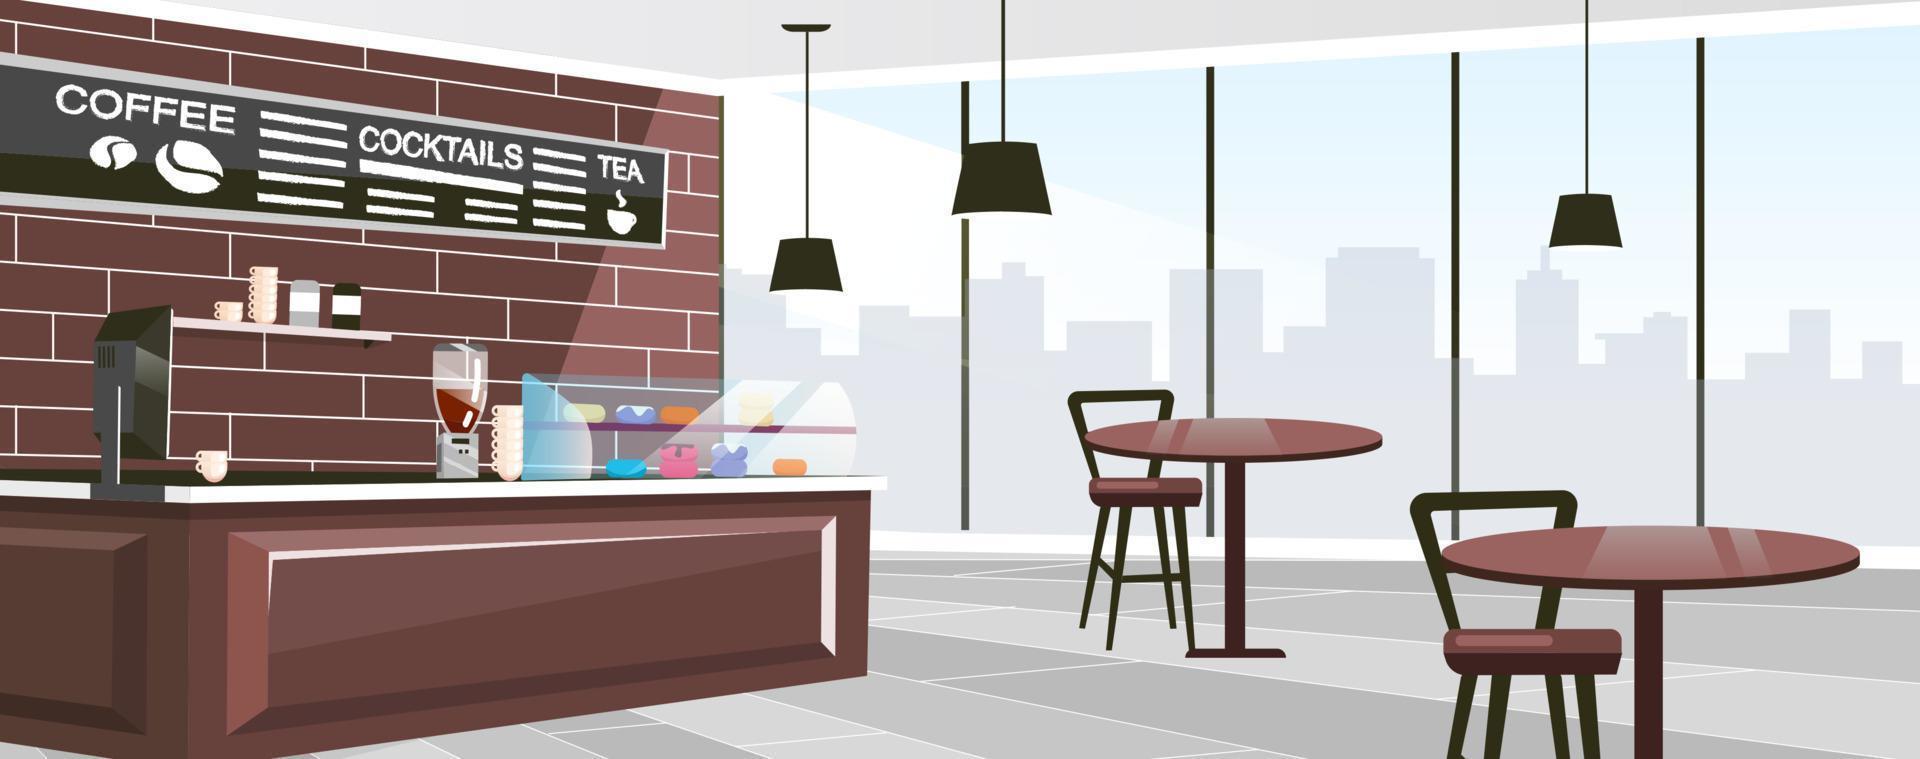 Ilustración de vector plano de espacio de café urbano. Ventanas panorámicas de la moderna cafetería. Mostrador de madera de dibujos animados, vitrina de vidrio con postres. menú de pizarra de moda con café, té, lista de cócteles